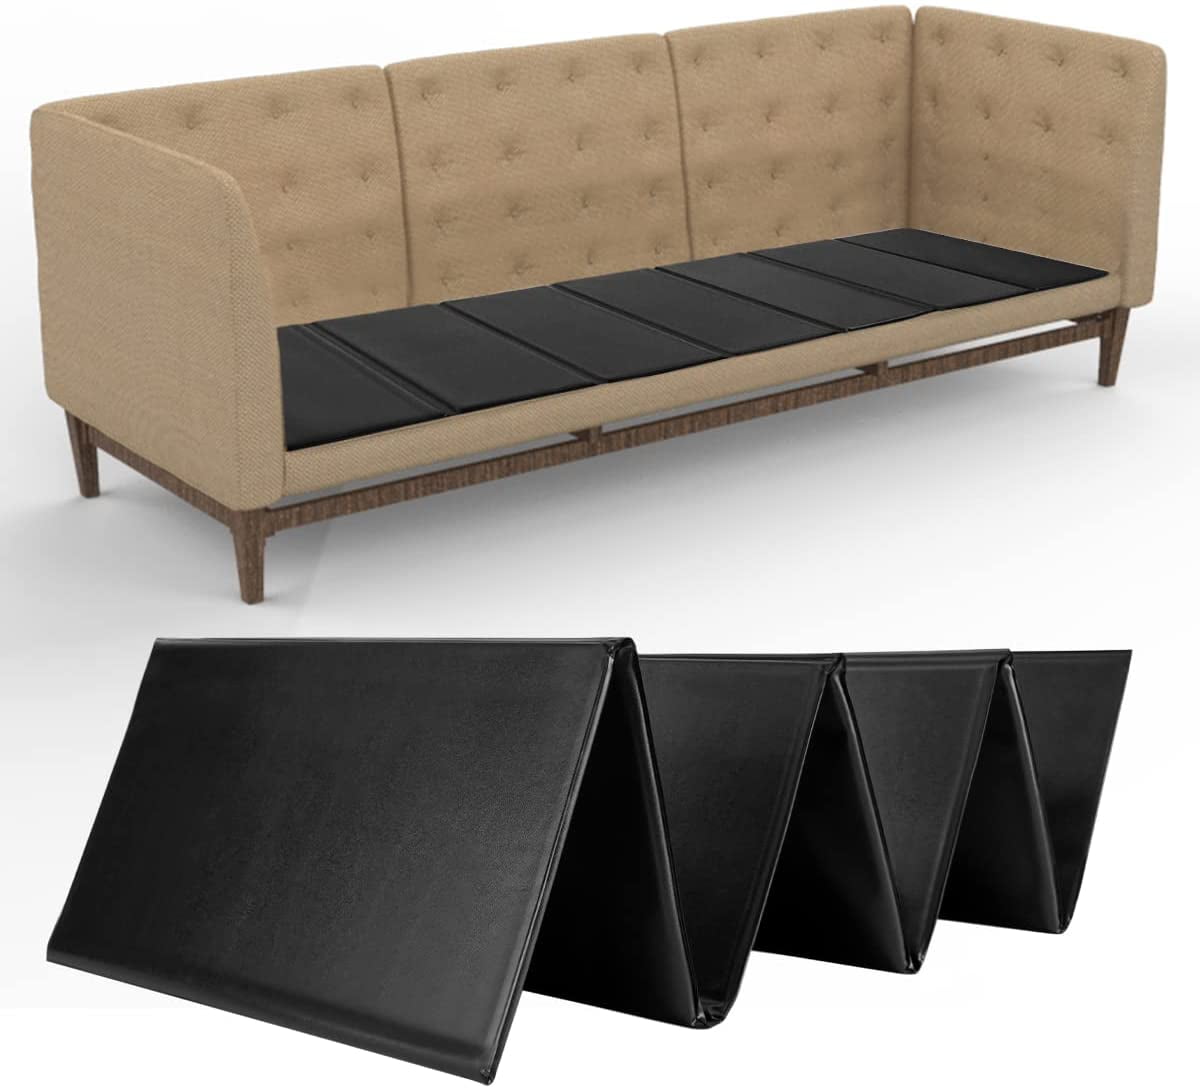  SDLDEER Couch Cushion Support, 20 x 67 Heavy Duty